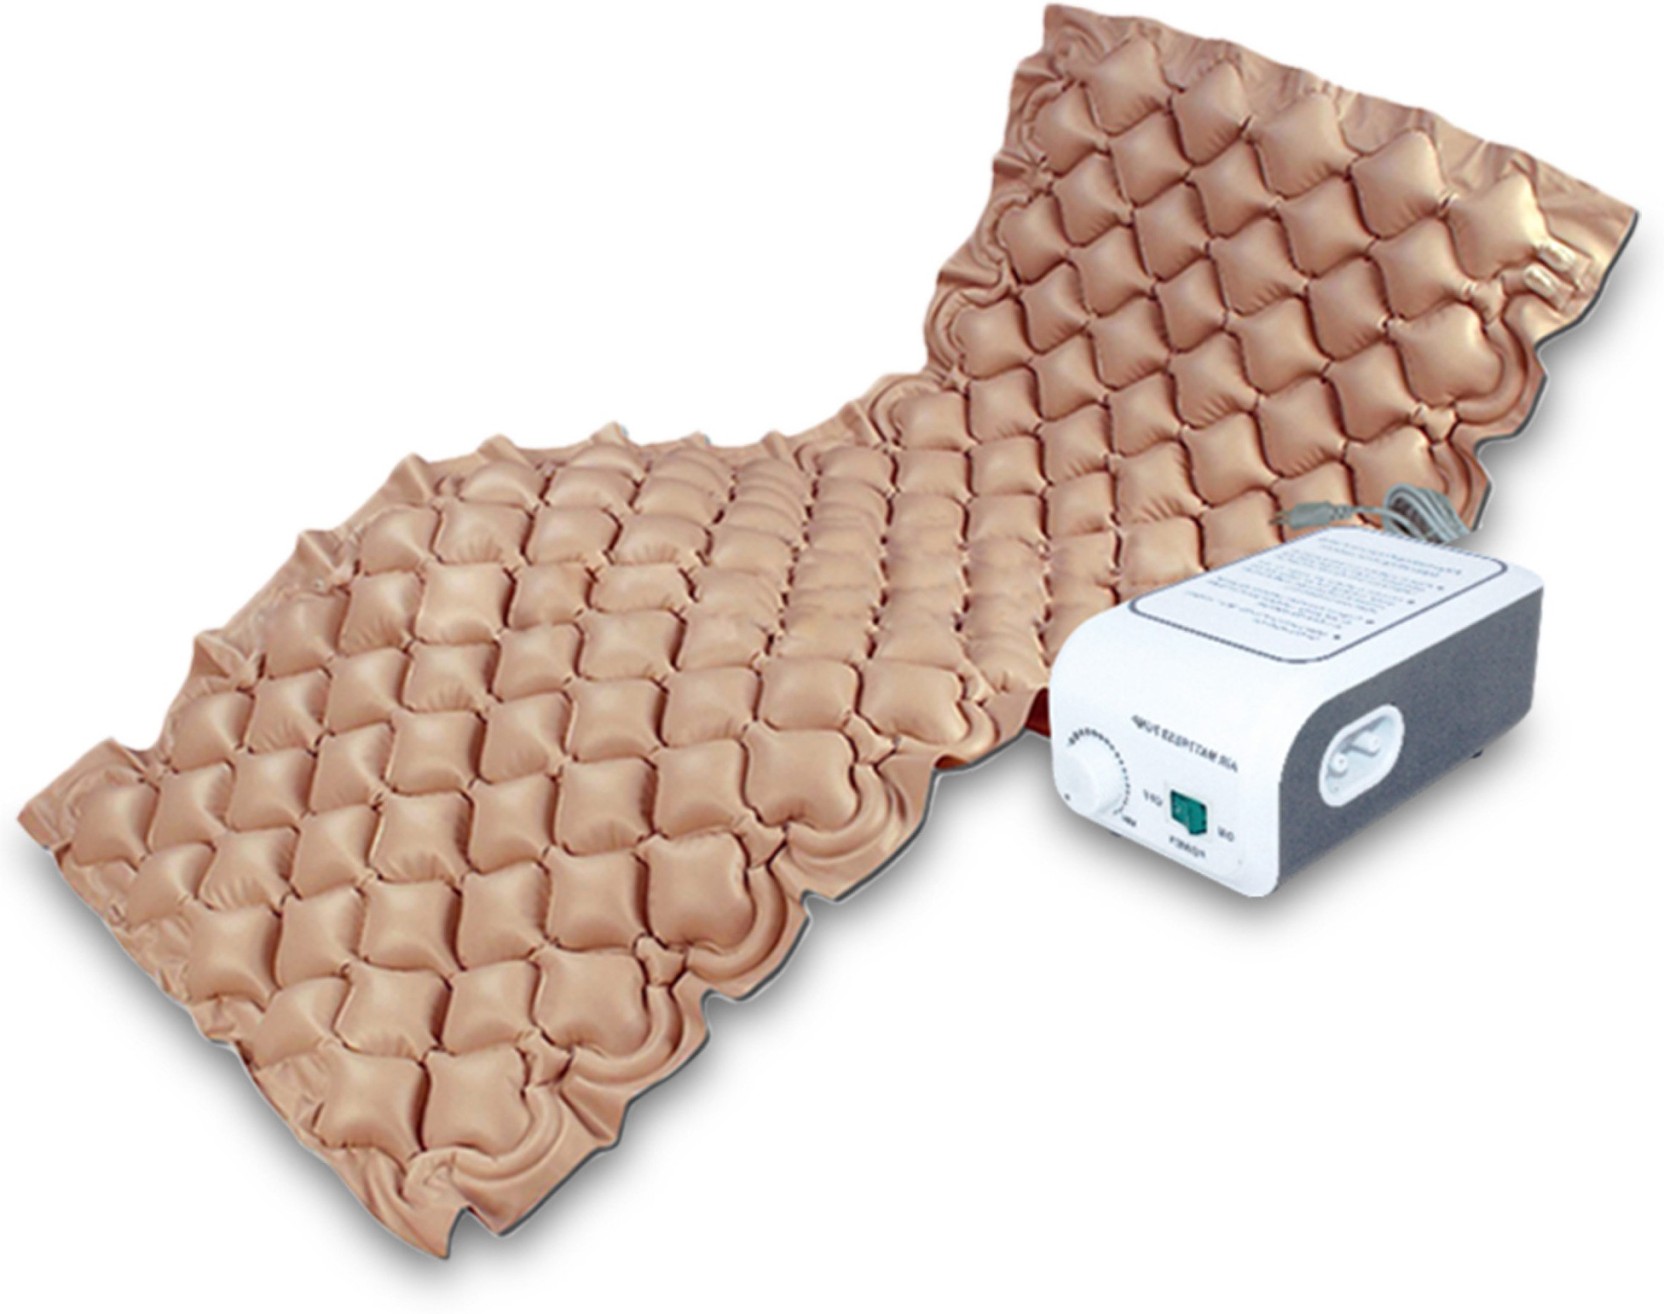 air mattress vs pillow for pressure ulcer